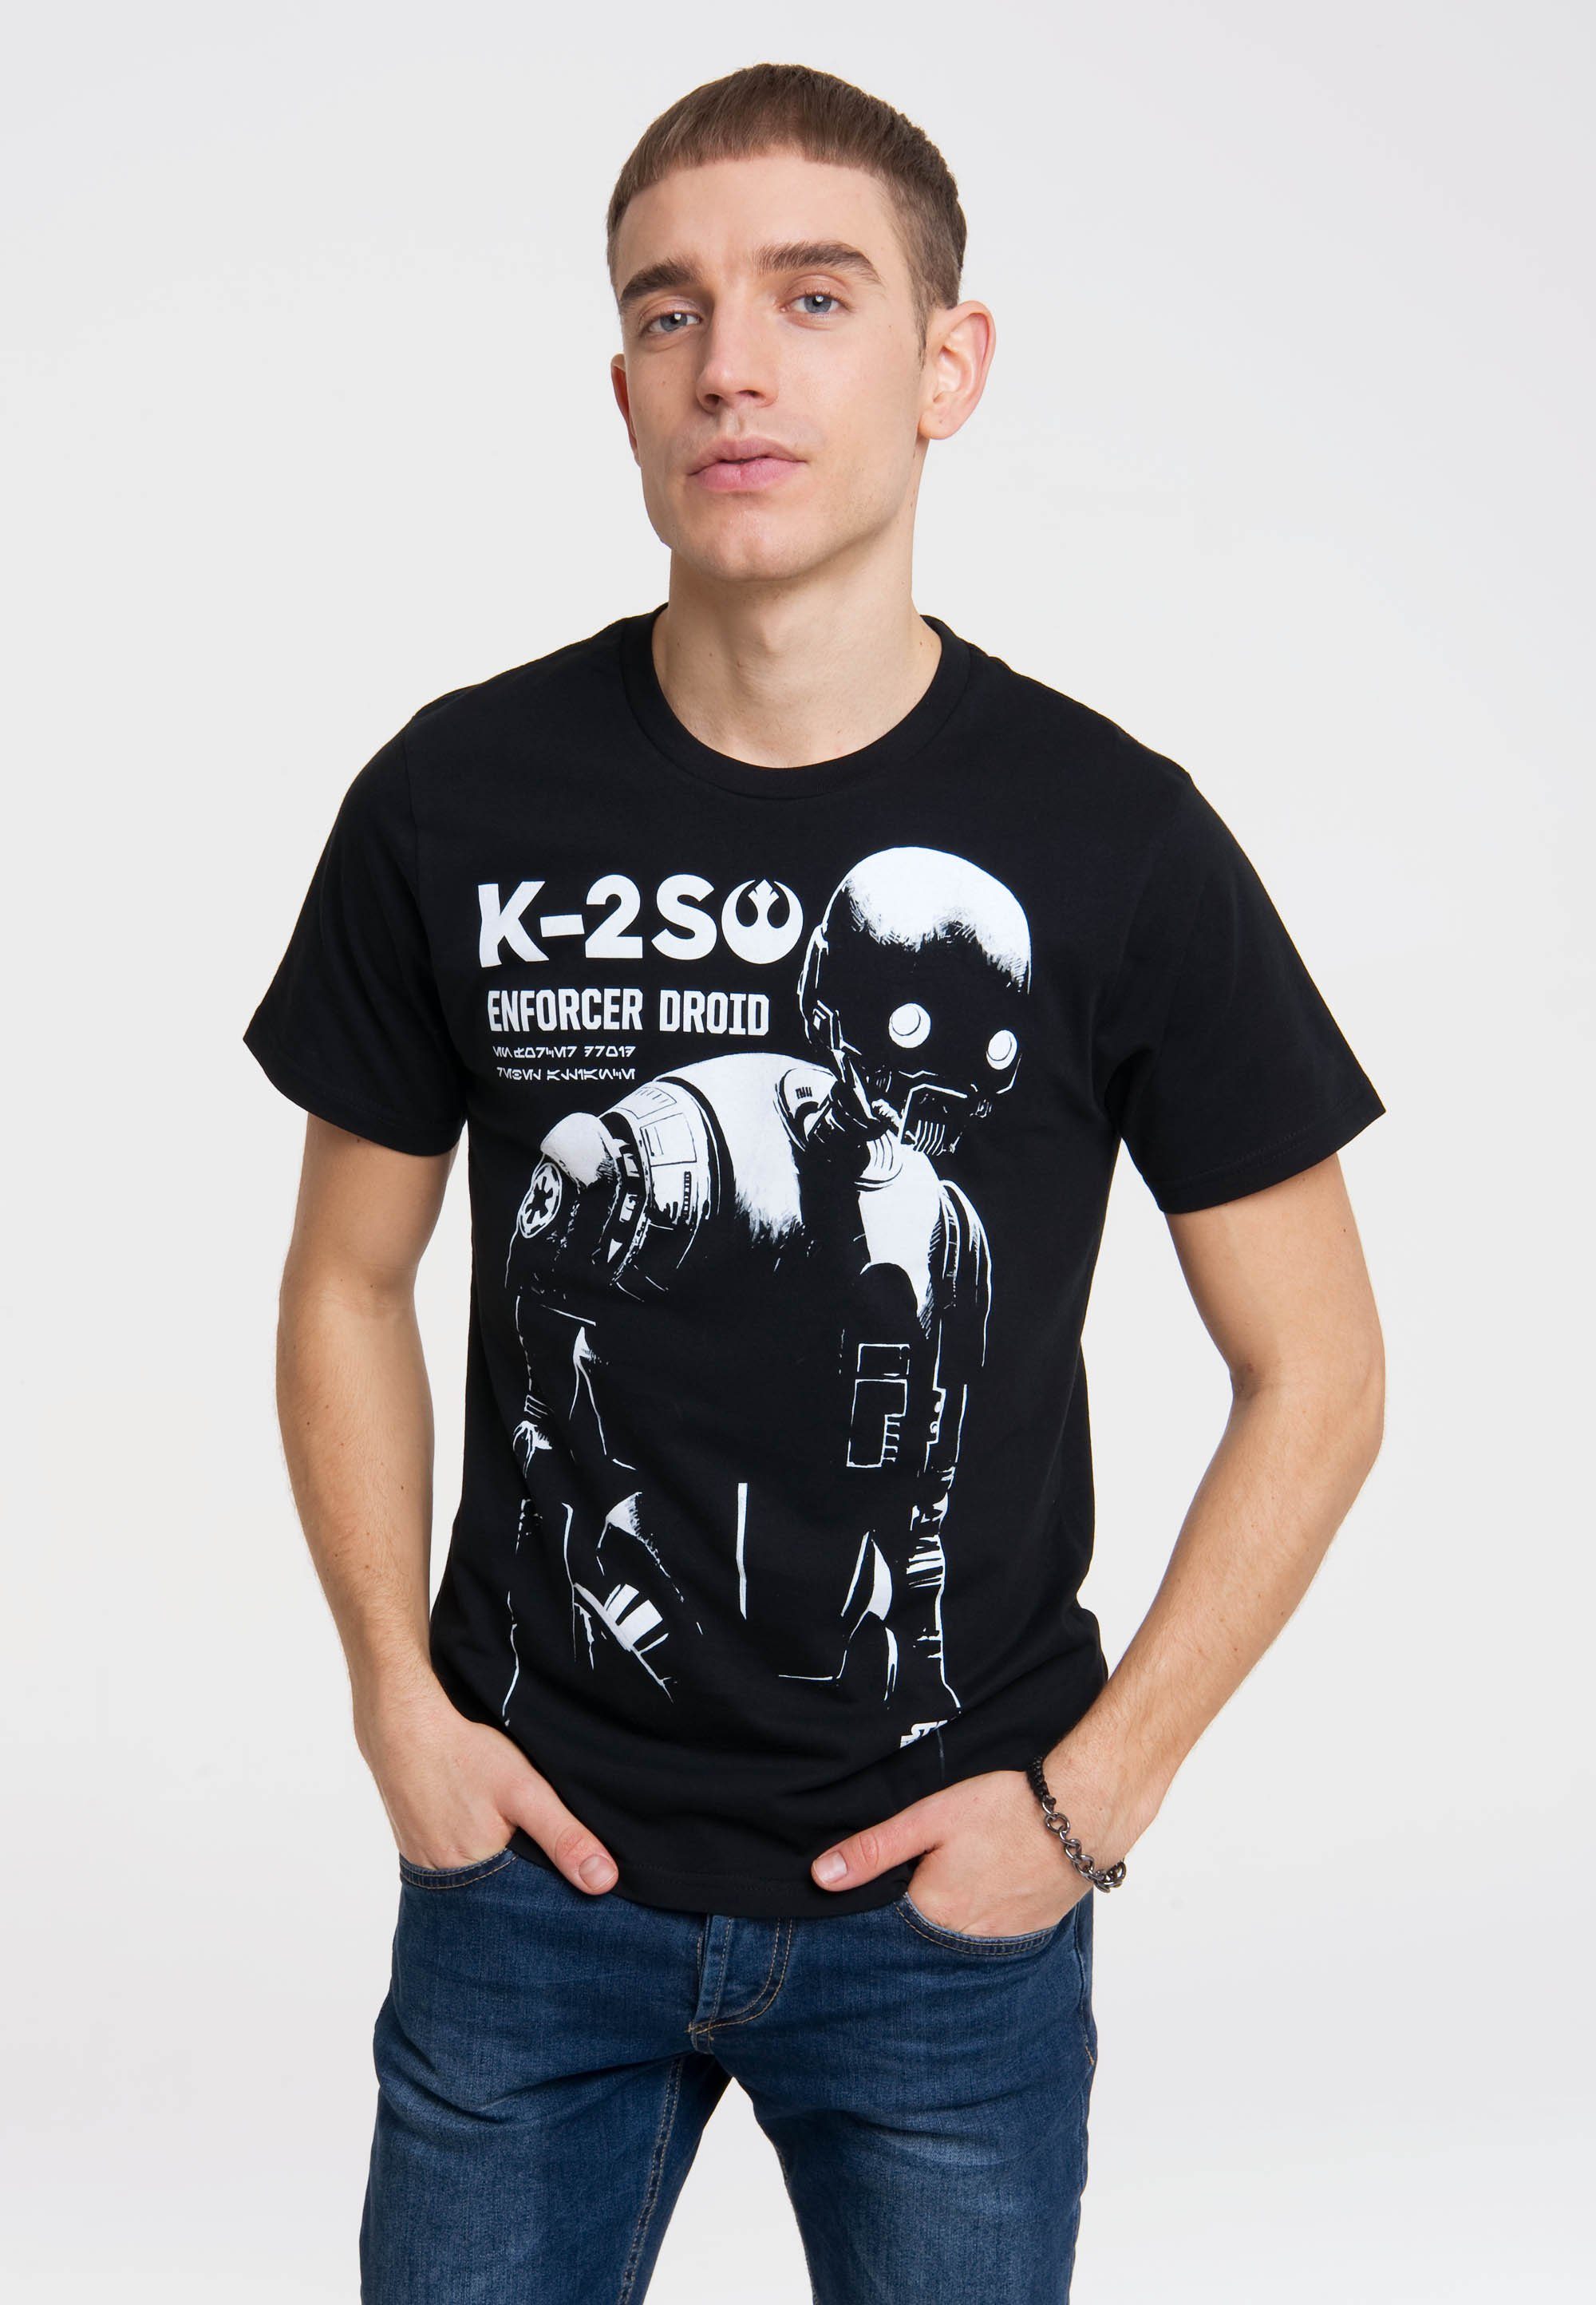 LOGOSHIRT T-Shirt Star Wars - K-2SO mit tollem Star Wars-Frontdruck